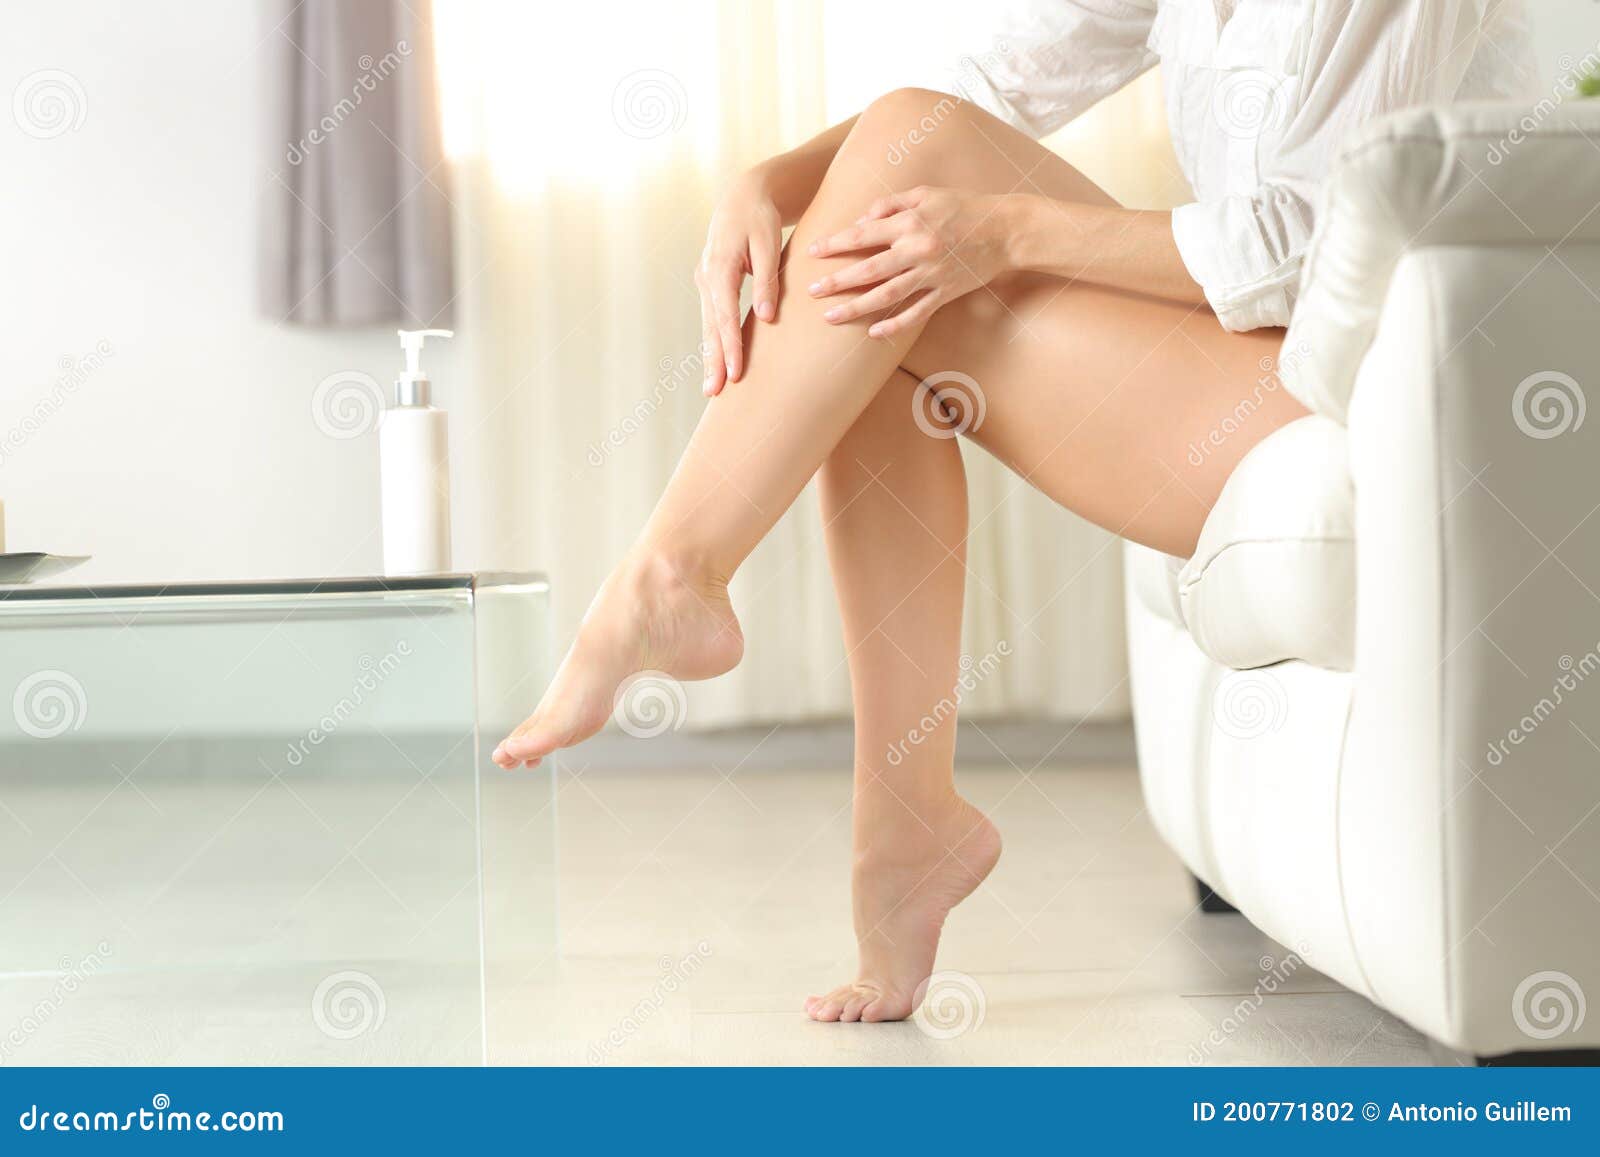 woman with waxed legs aplying moisturizer cream